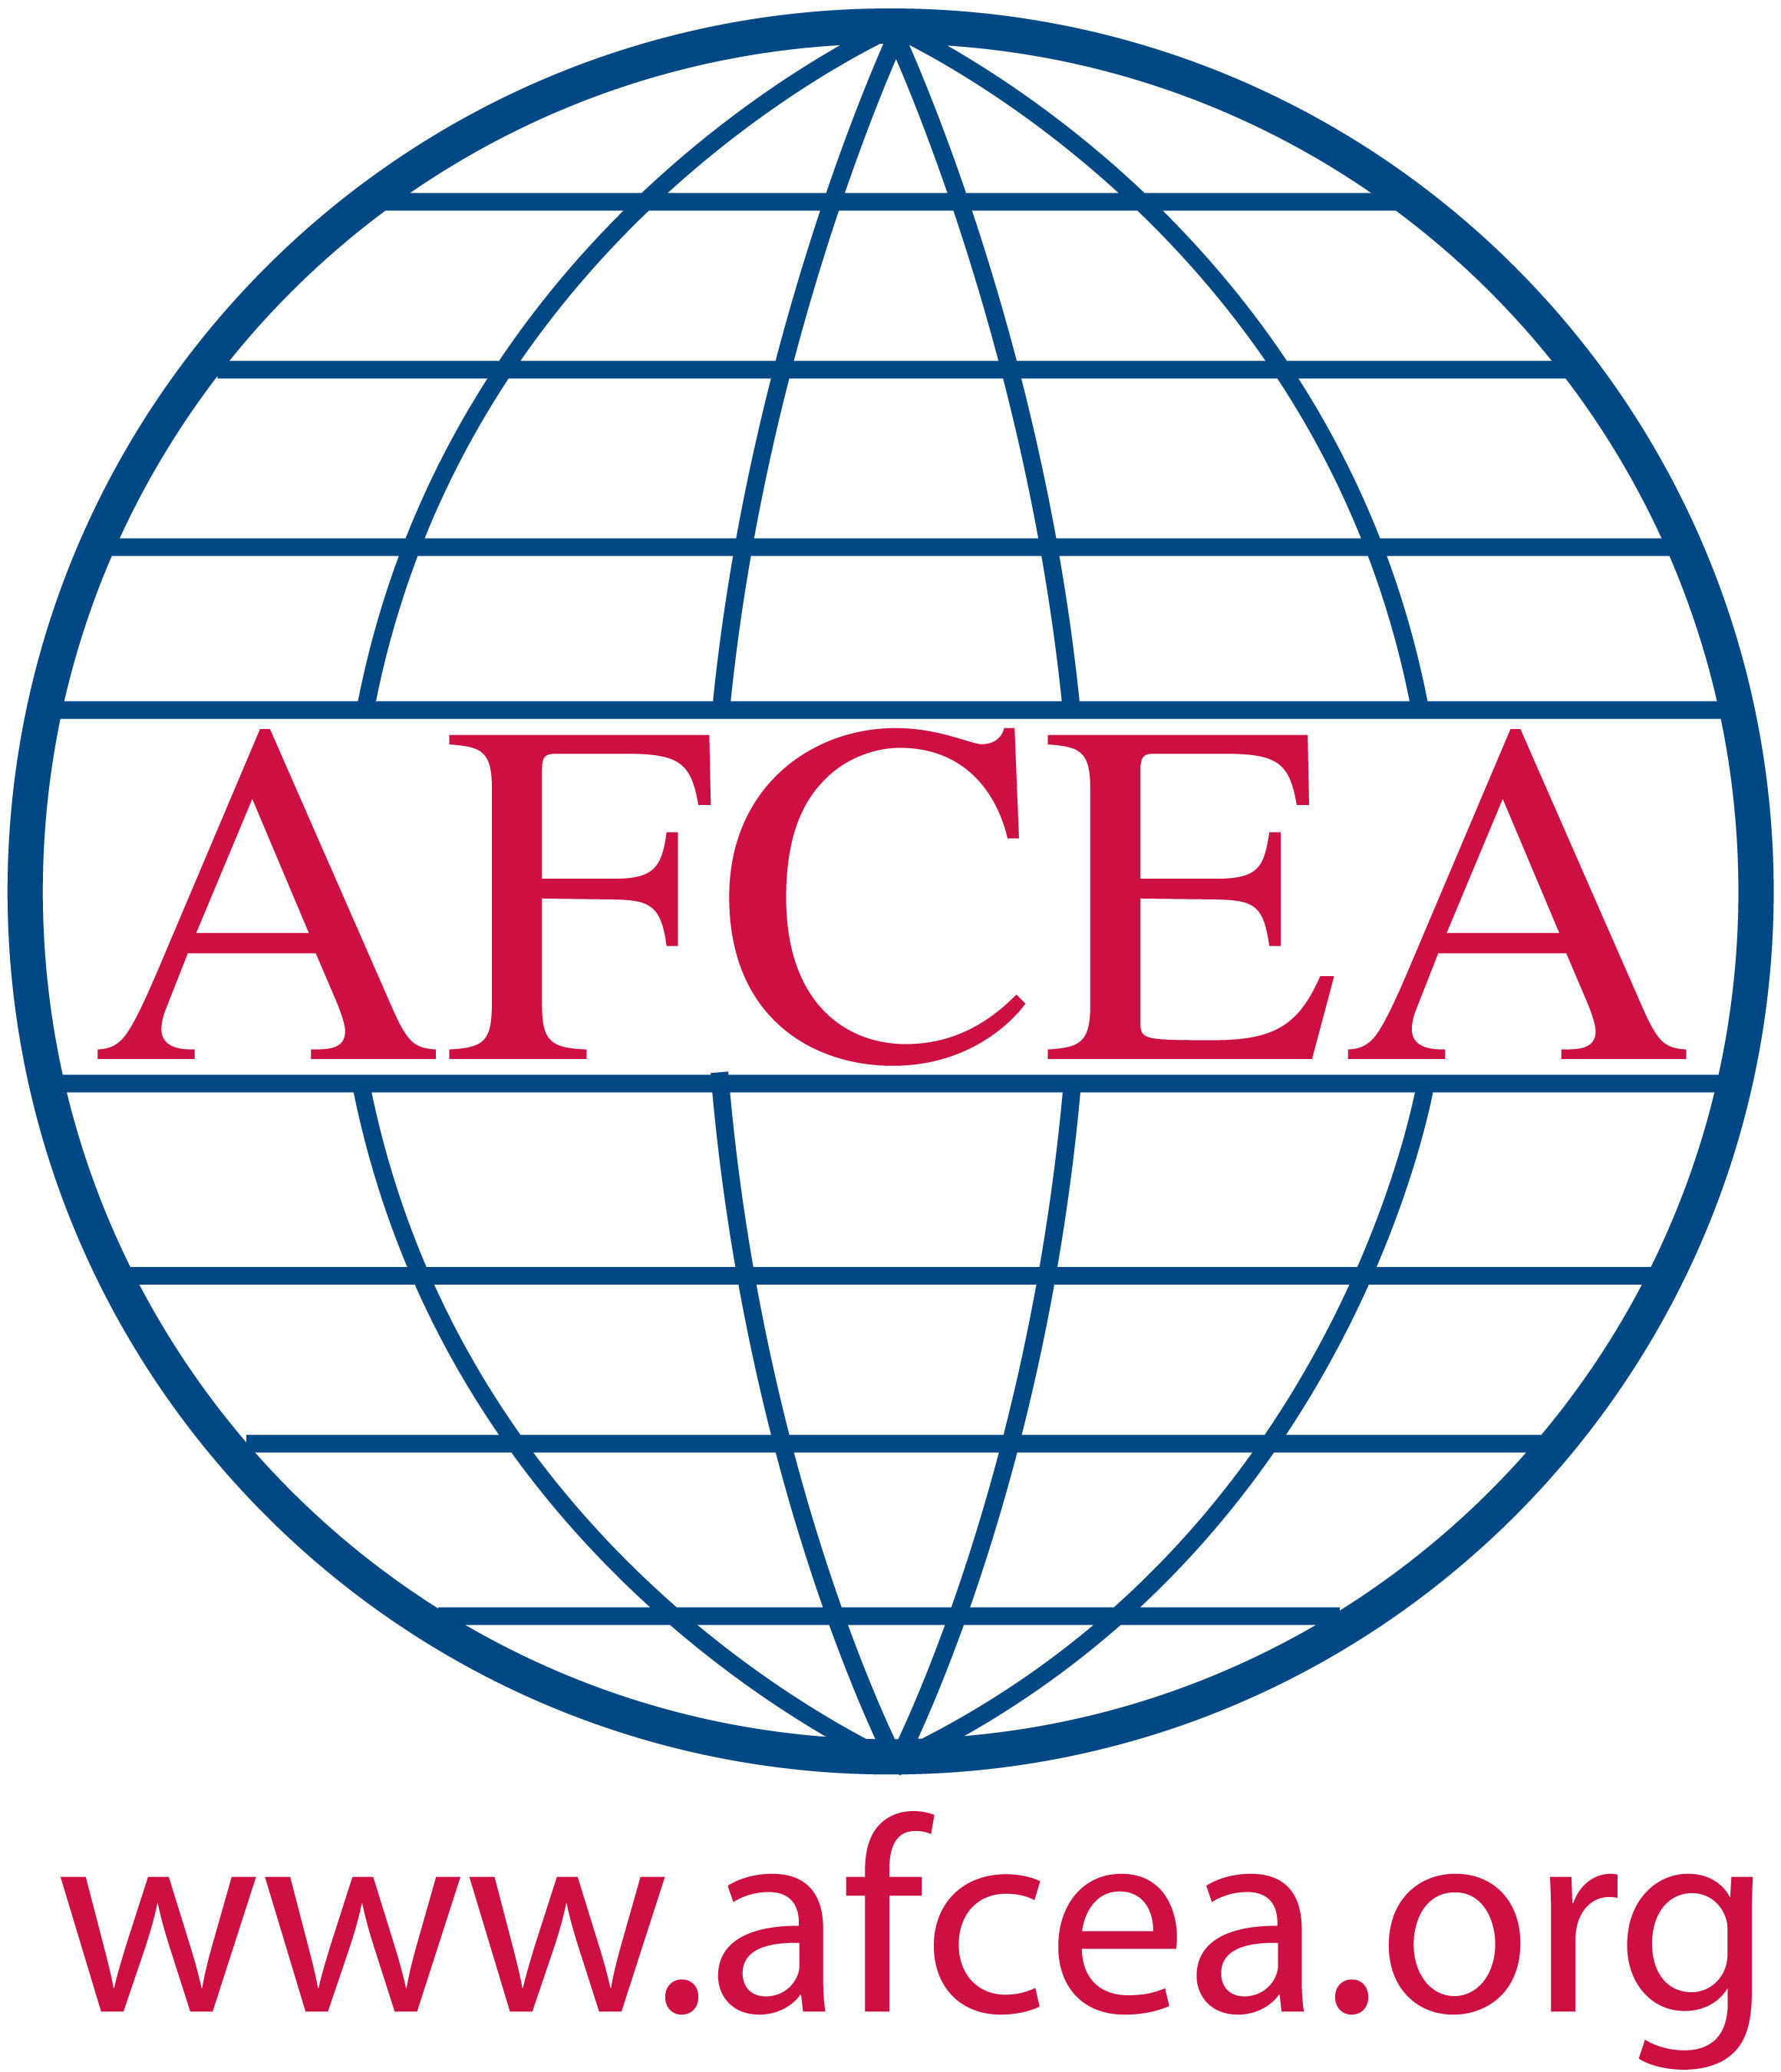 AFCEA International Logo.